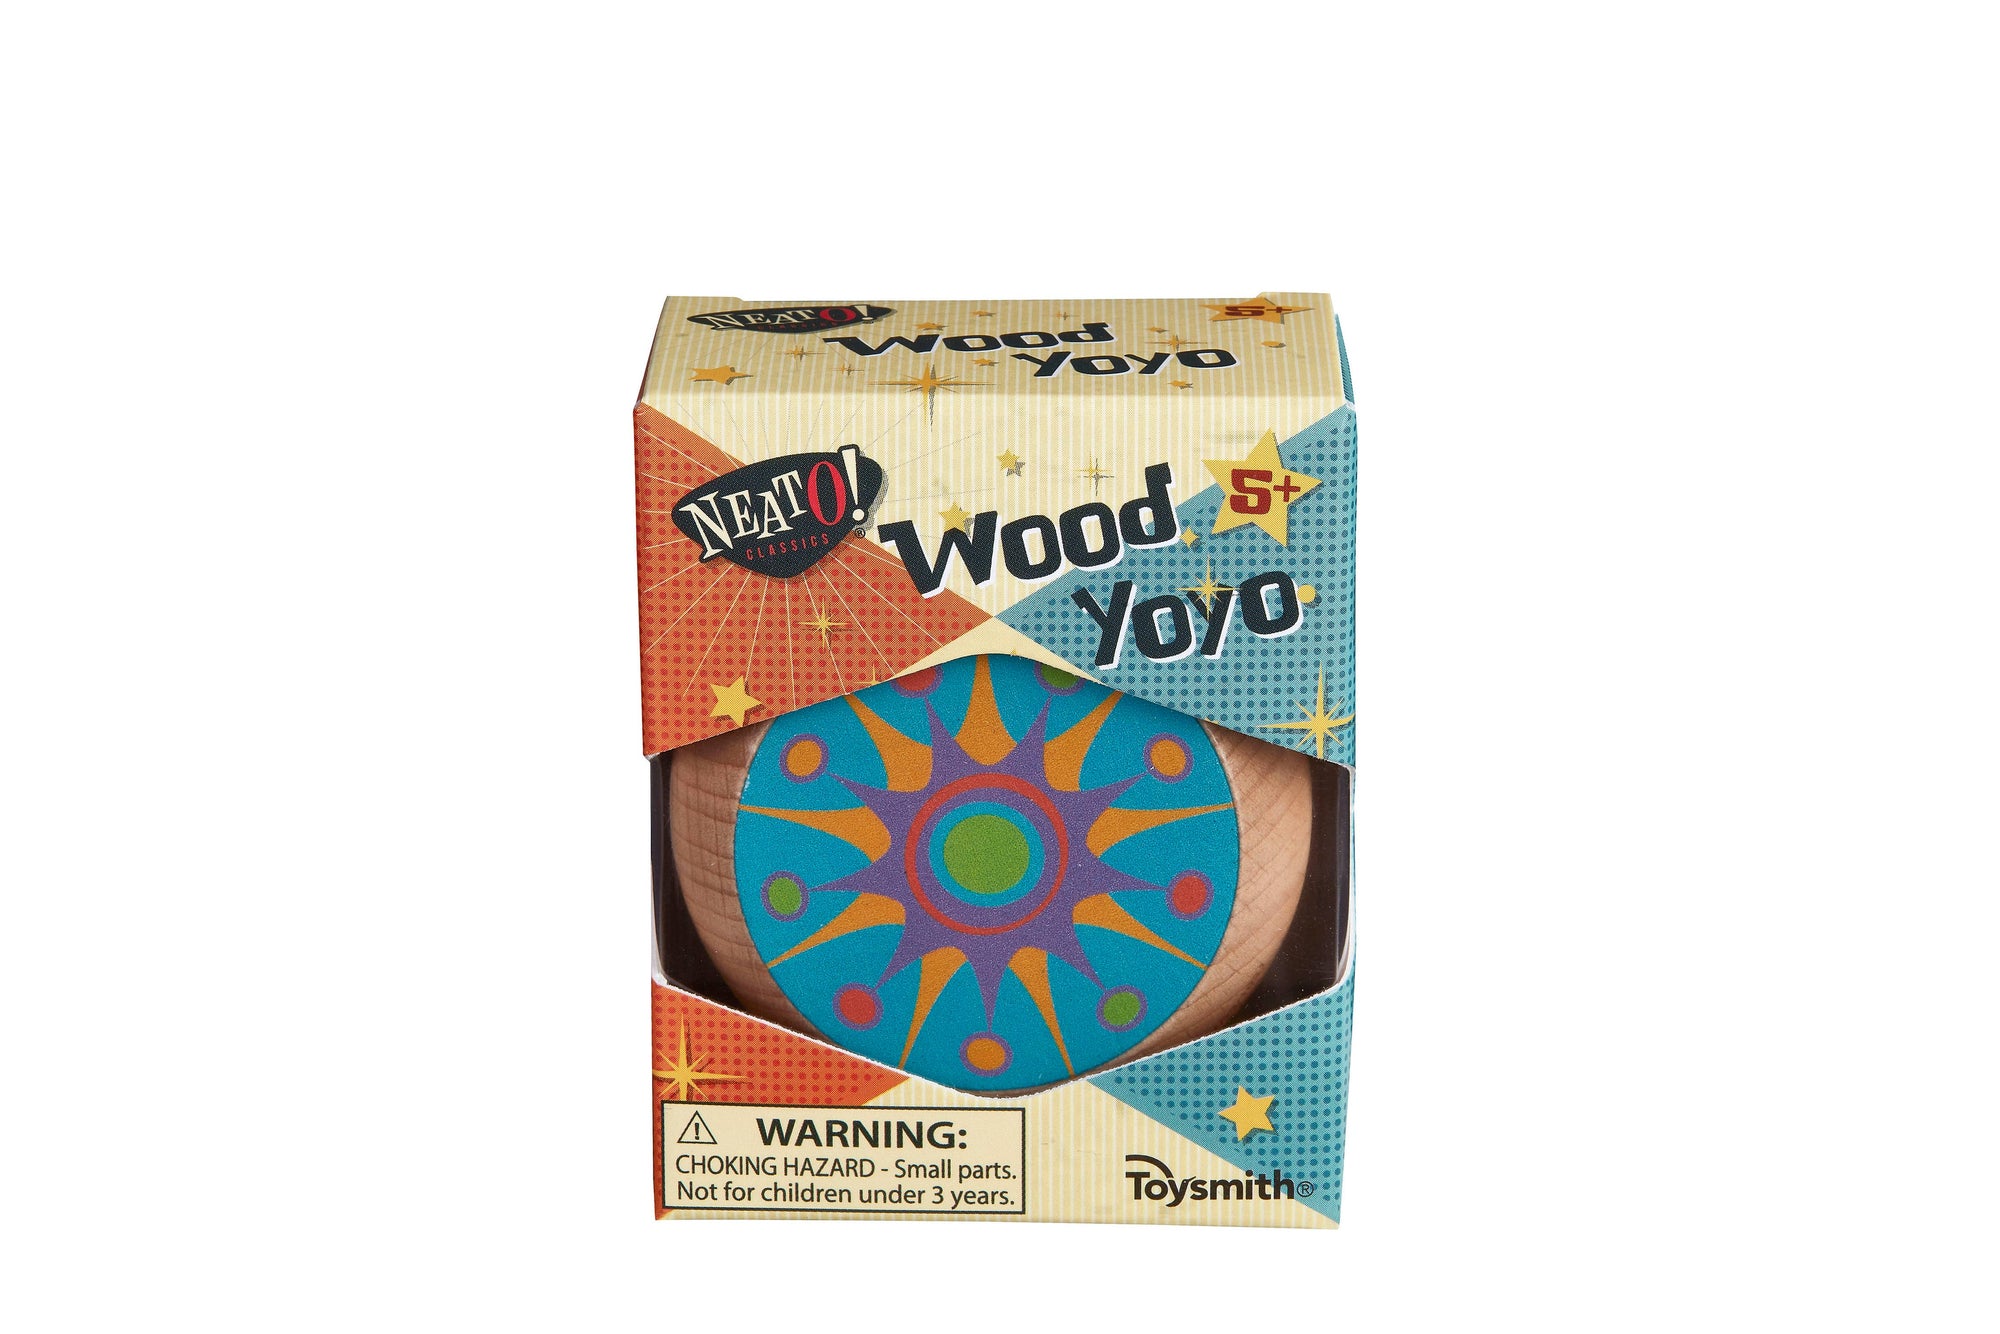 A colorful classic Neato! Wood Yo-Yo in packaging marked with “Neato! Classics wood yo yo,” featuring a vivid blue and orange mandala pattern on its surface. It also displays a choking hazard warning.